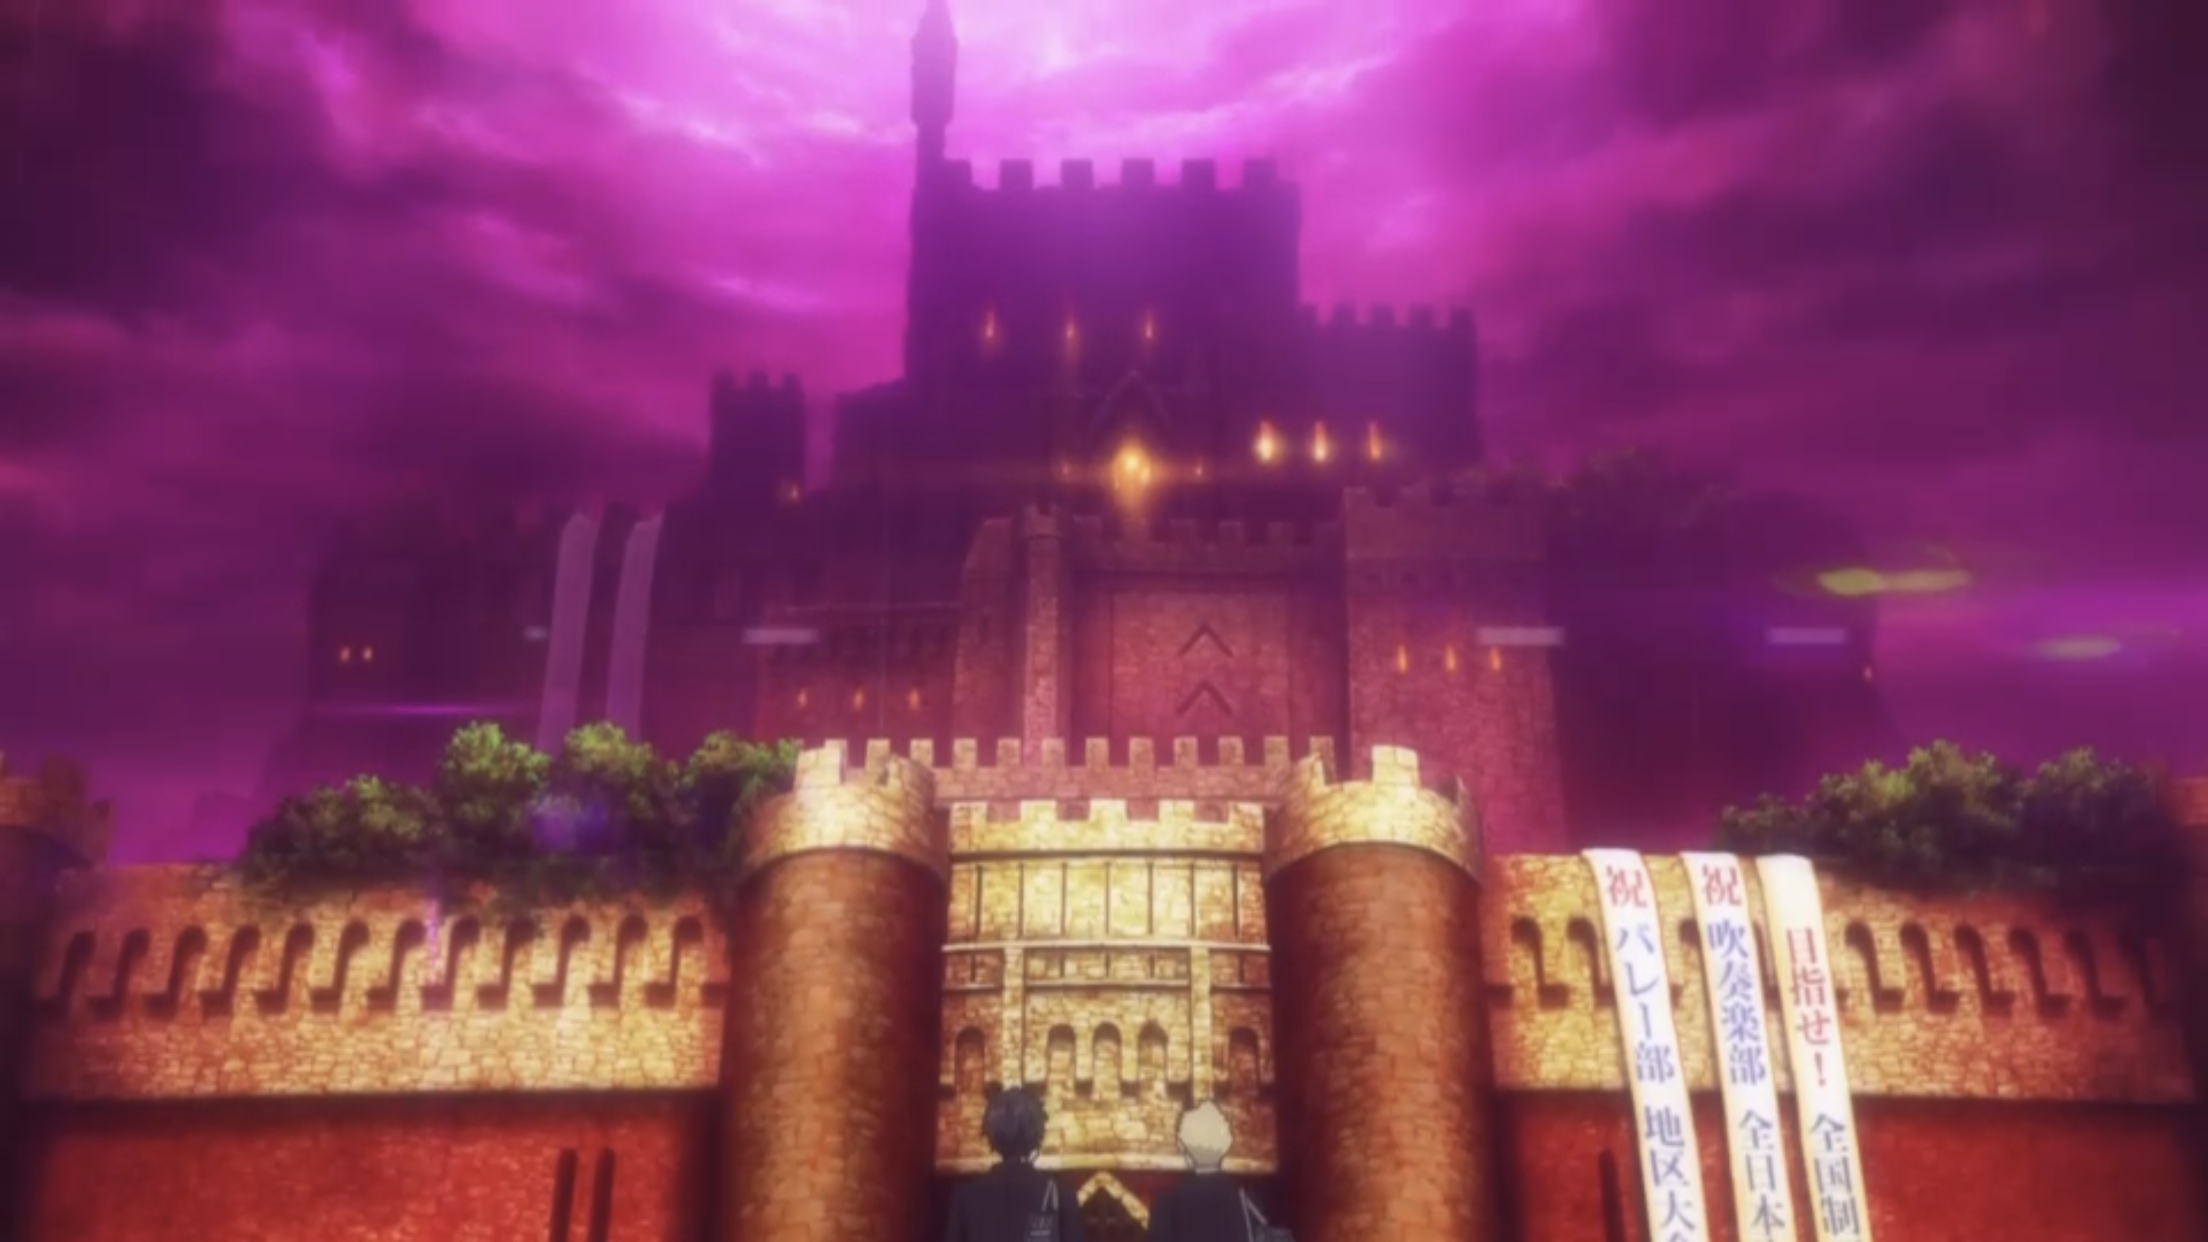 Persona 5: Kamoshida Palace - Torn King of Desire, 3F Key for the